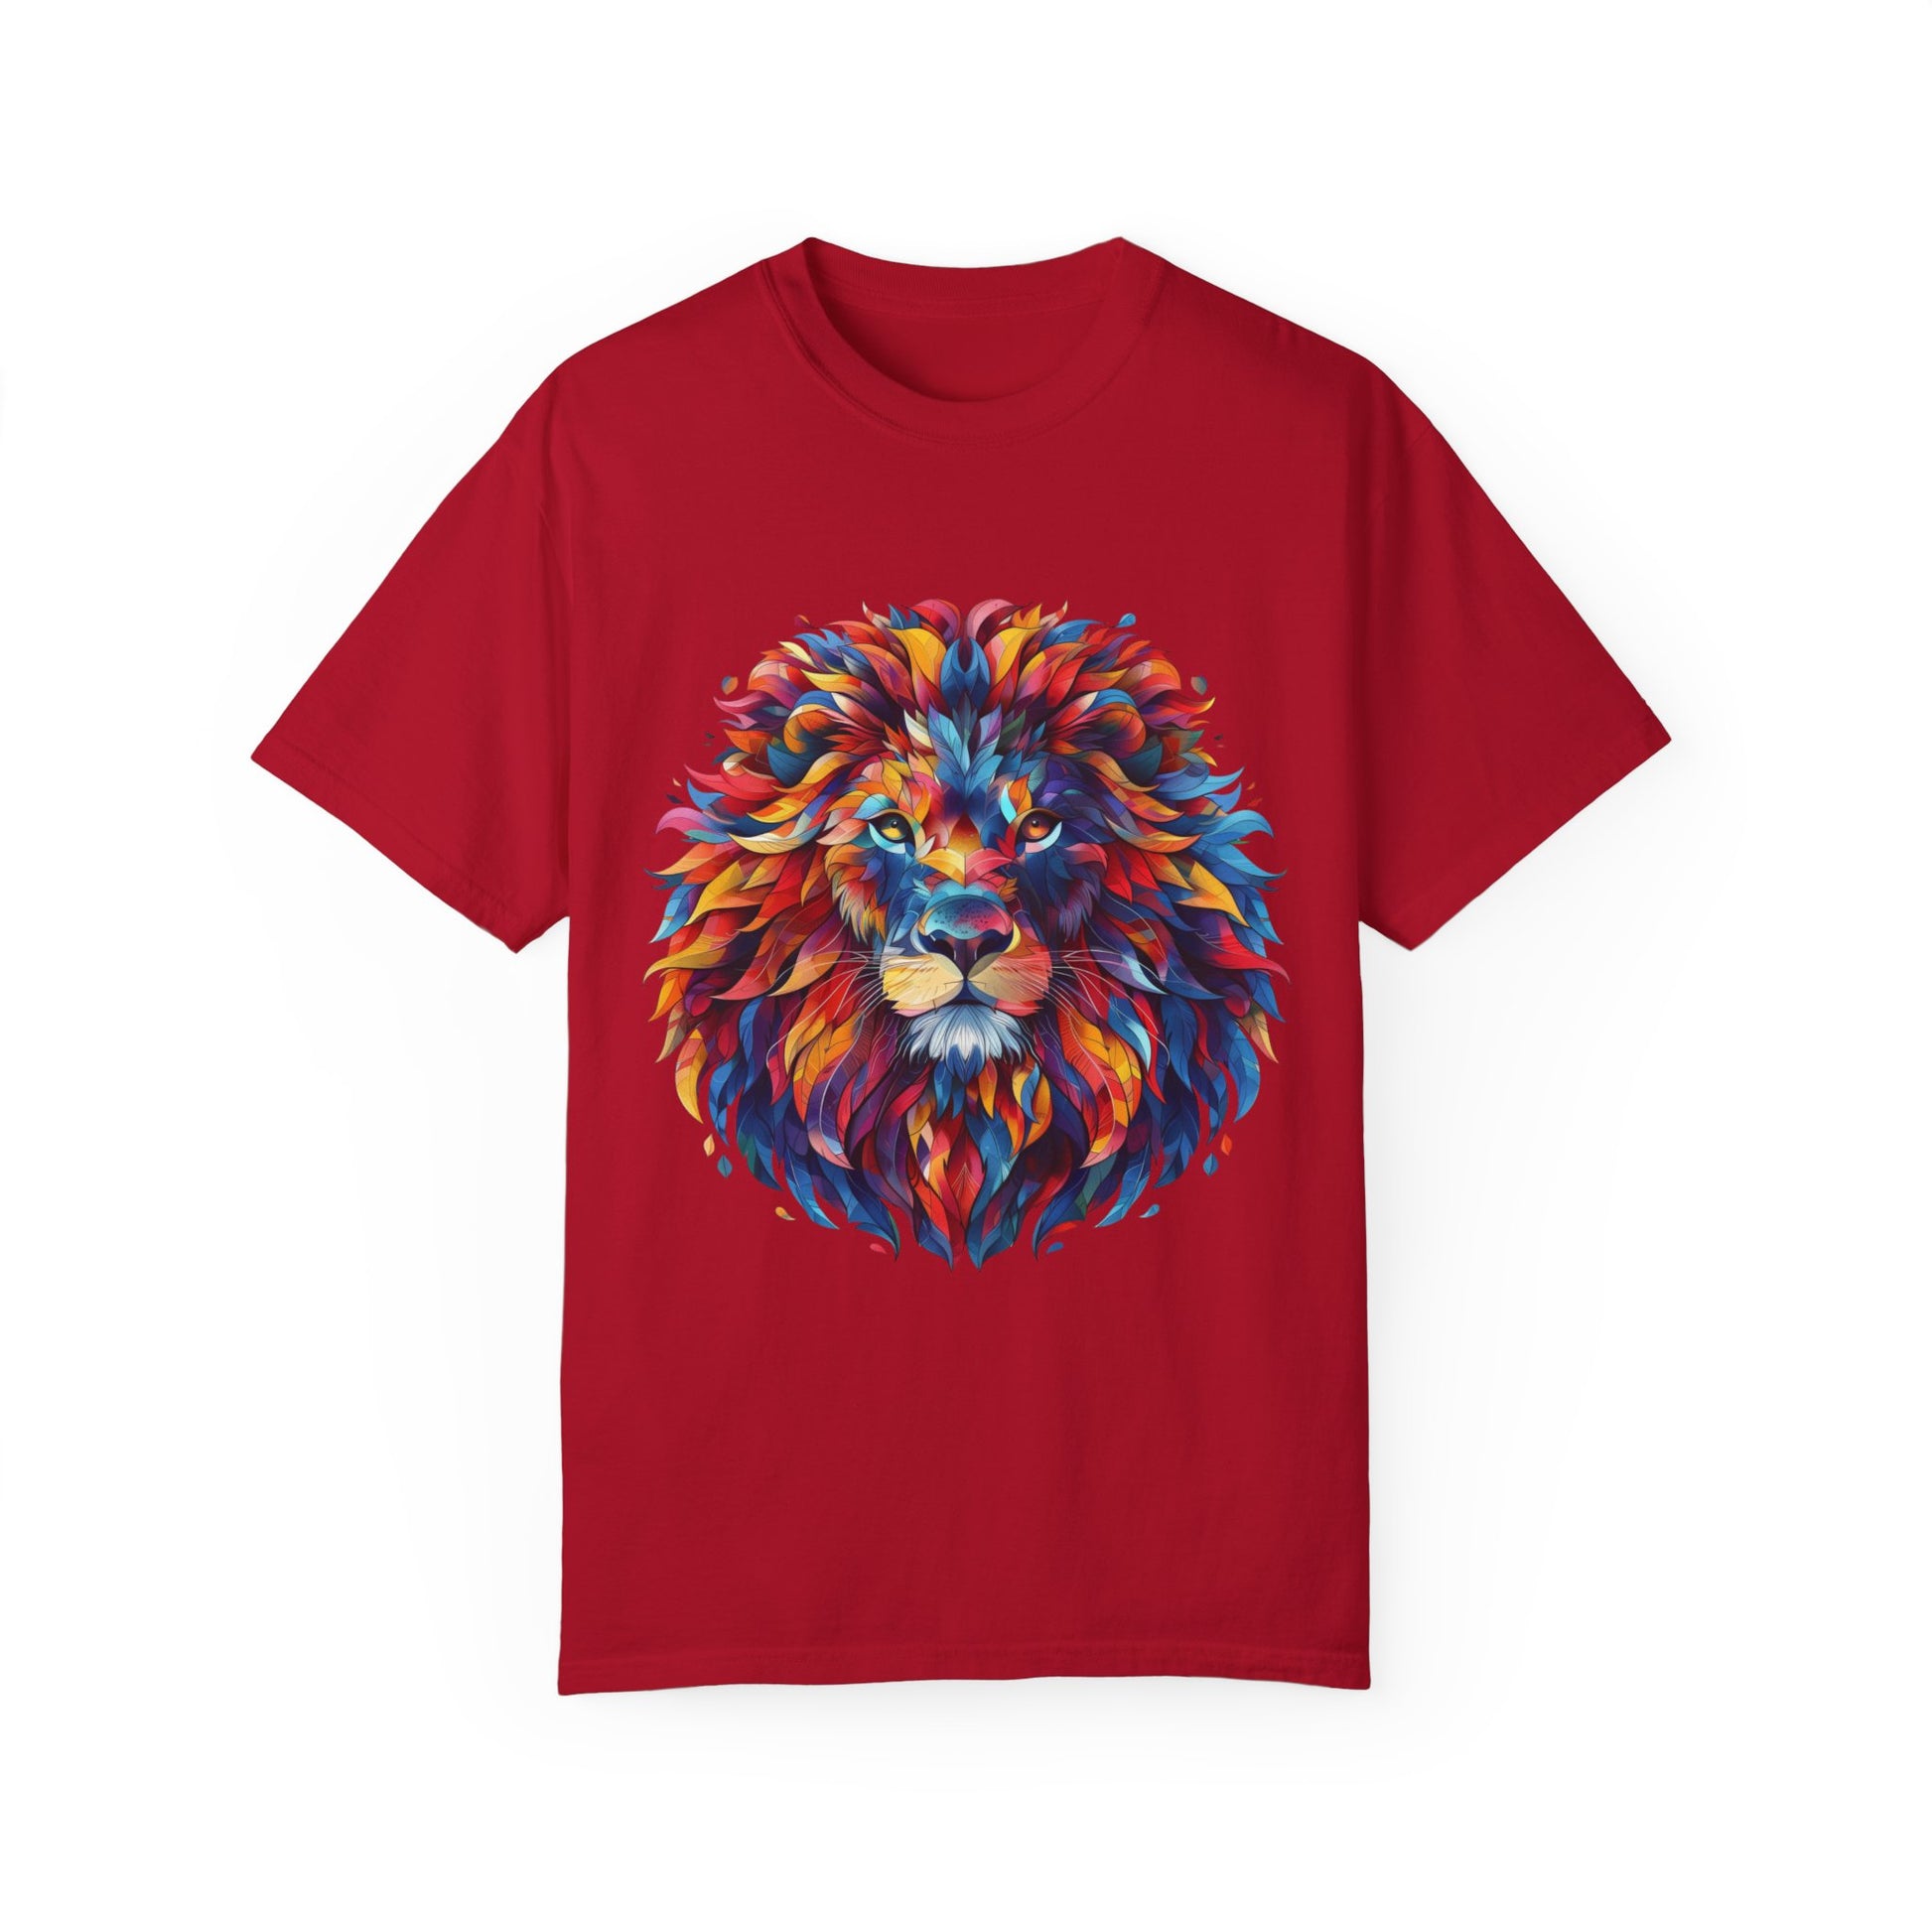 Lion Head Cool Graphic Design Novelty Unisex Garment-dyed T-shirt Cotton Funny Humorous Graphic Soft Premium Unisex Men Women Red T-shirt Birthday Gift-2